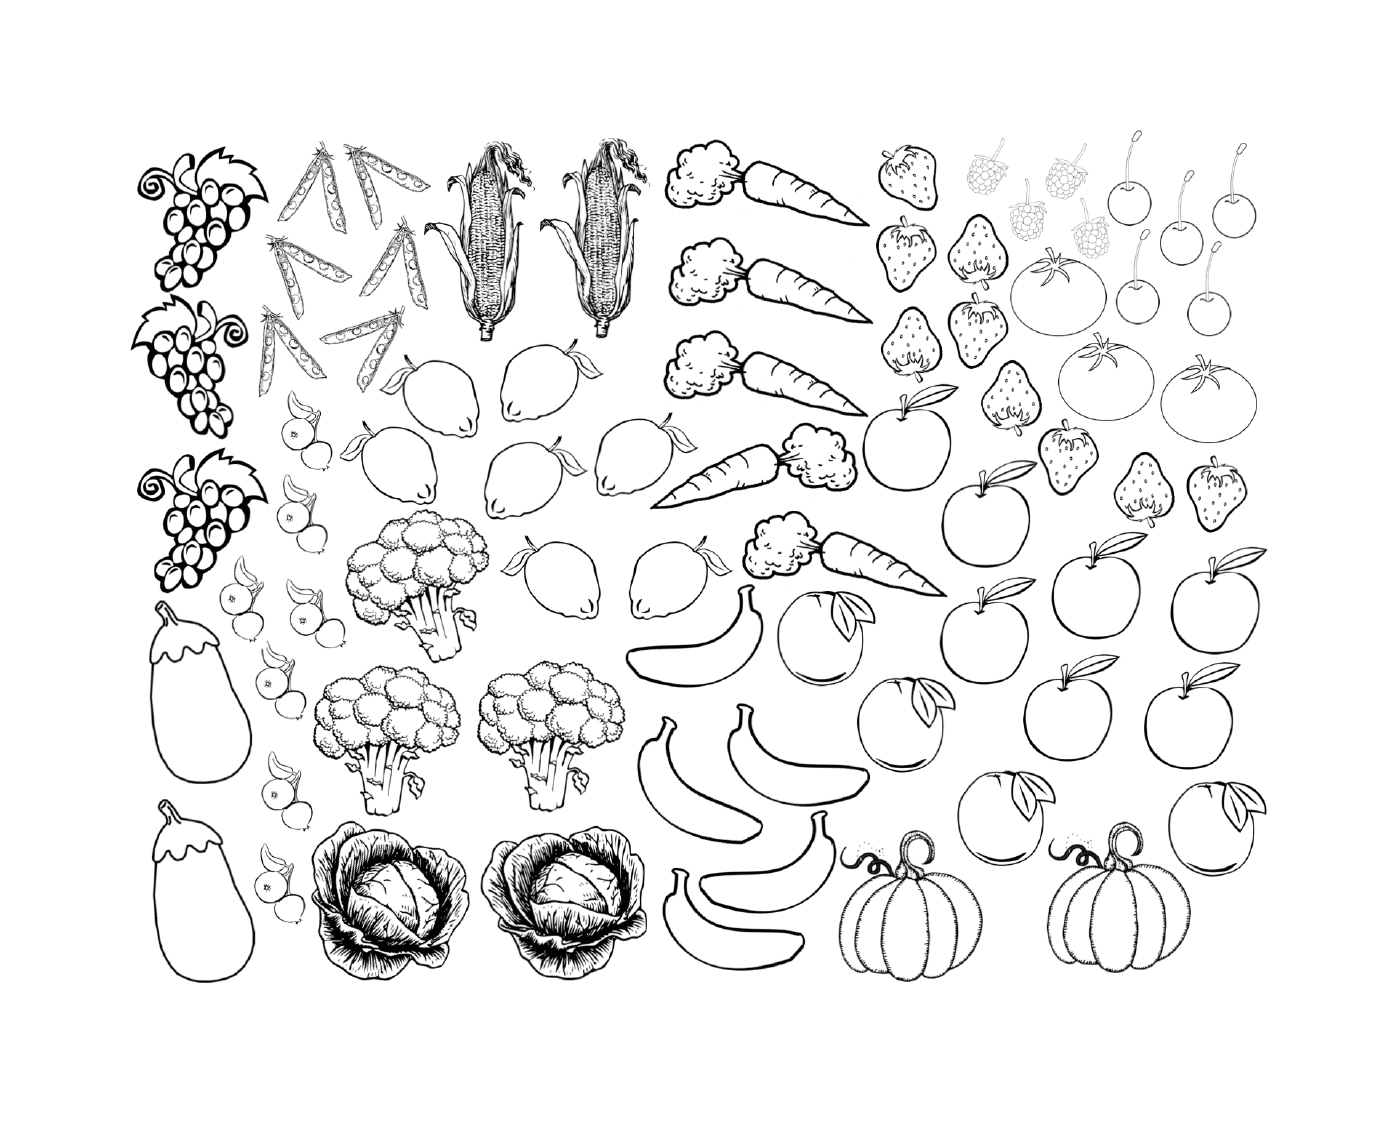  Fruit and vegetables in illustration 